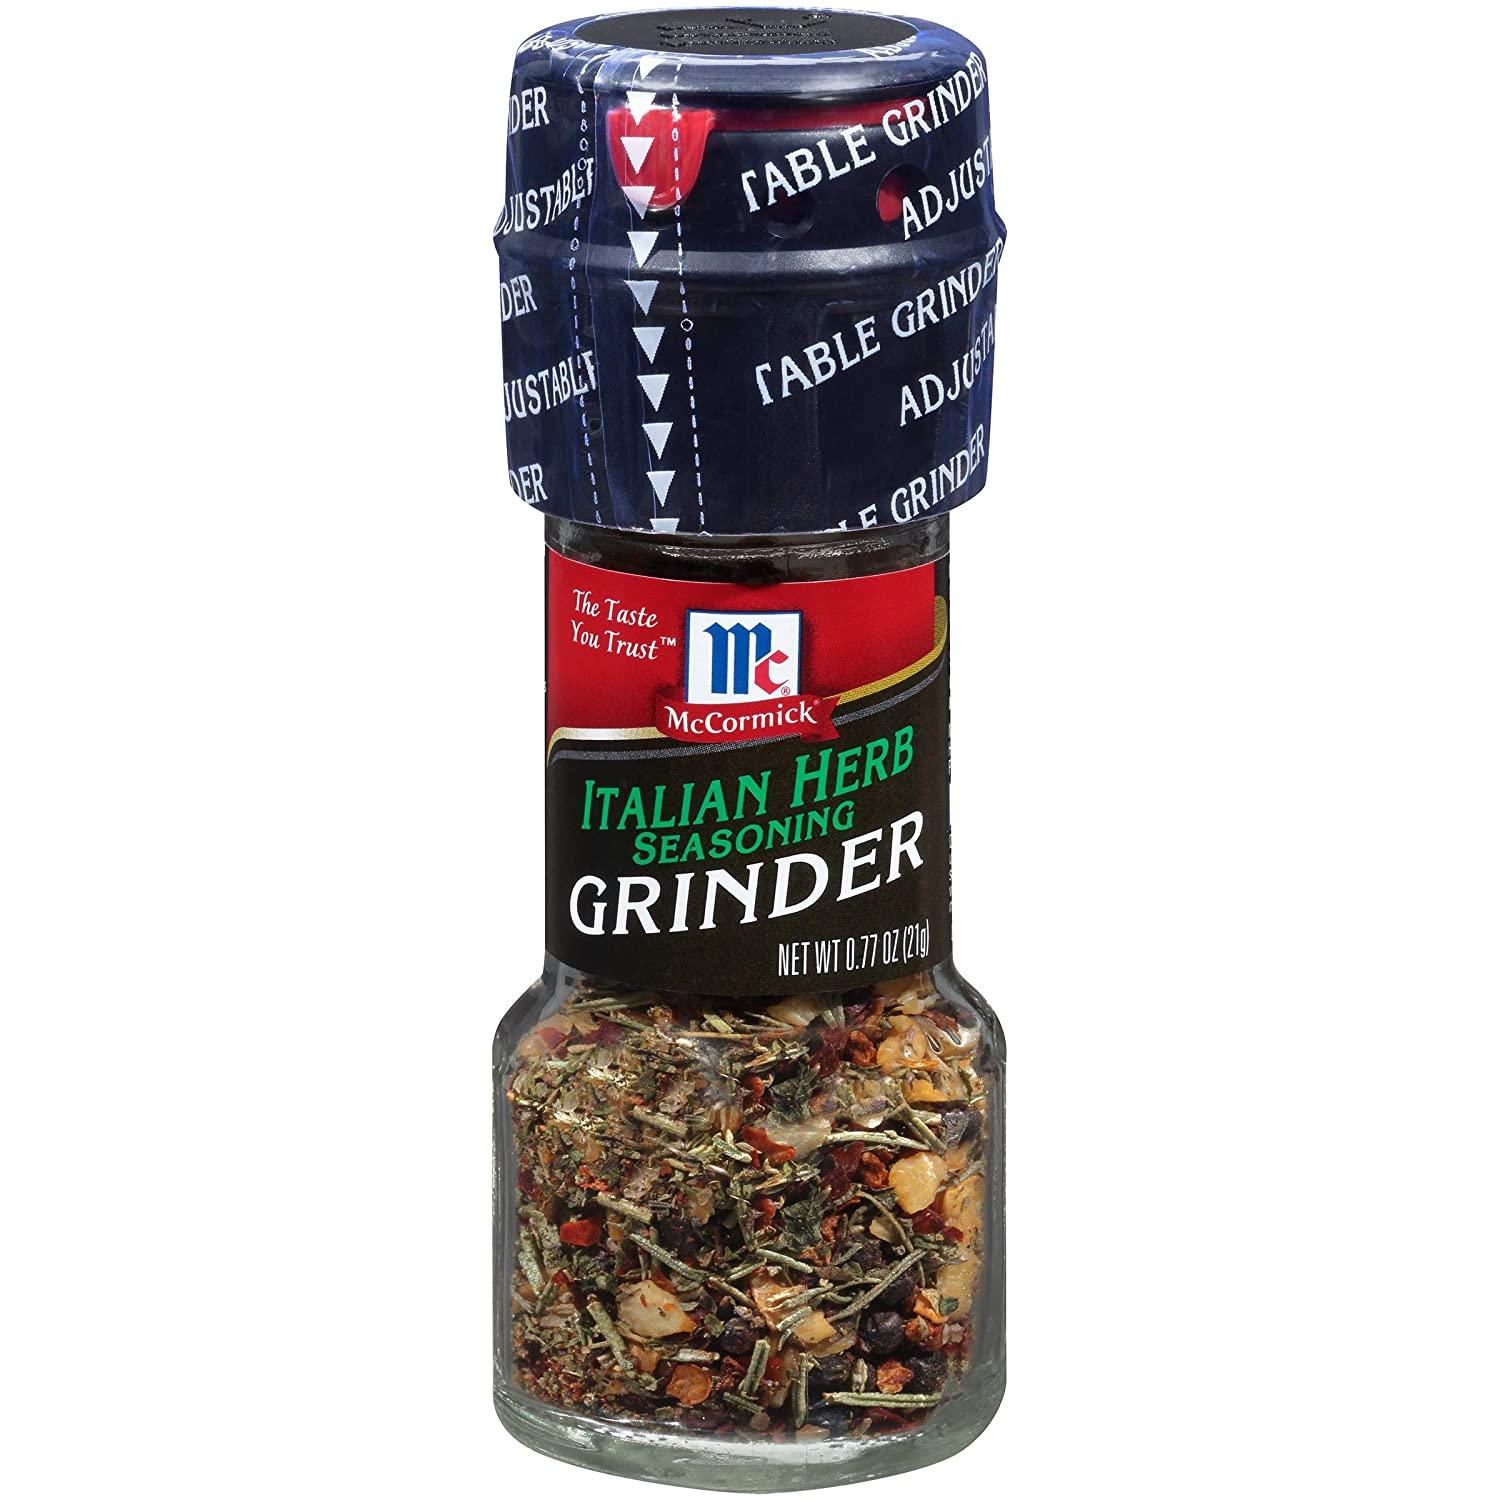 McCormick Italian Herb Seasoning Grinder for $1.45 Shipped